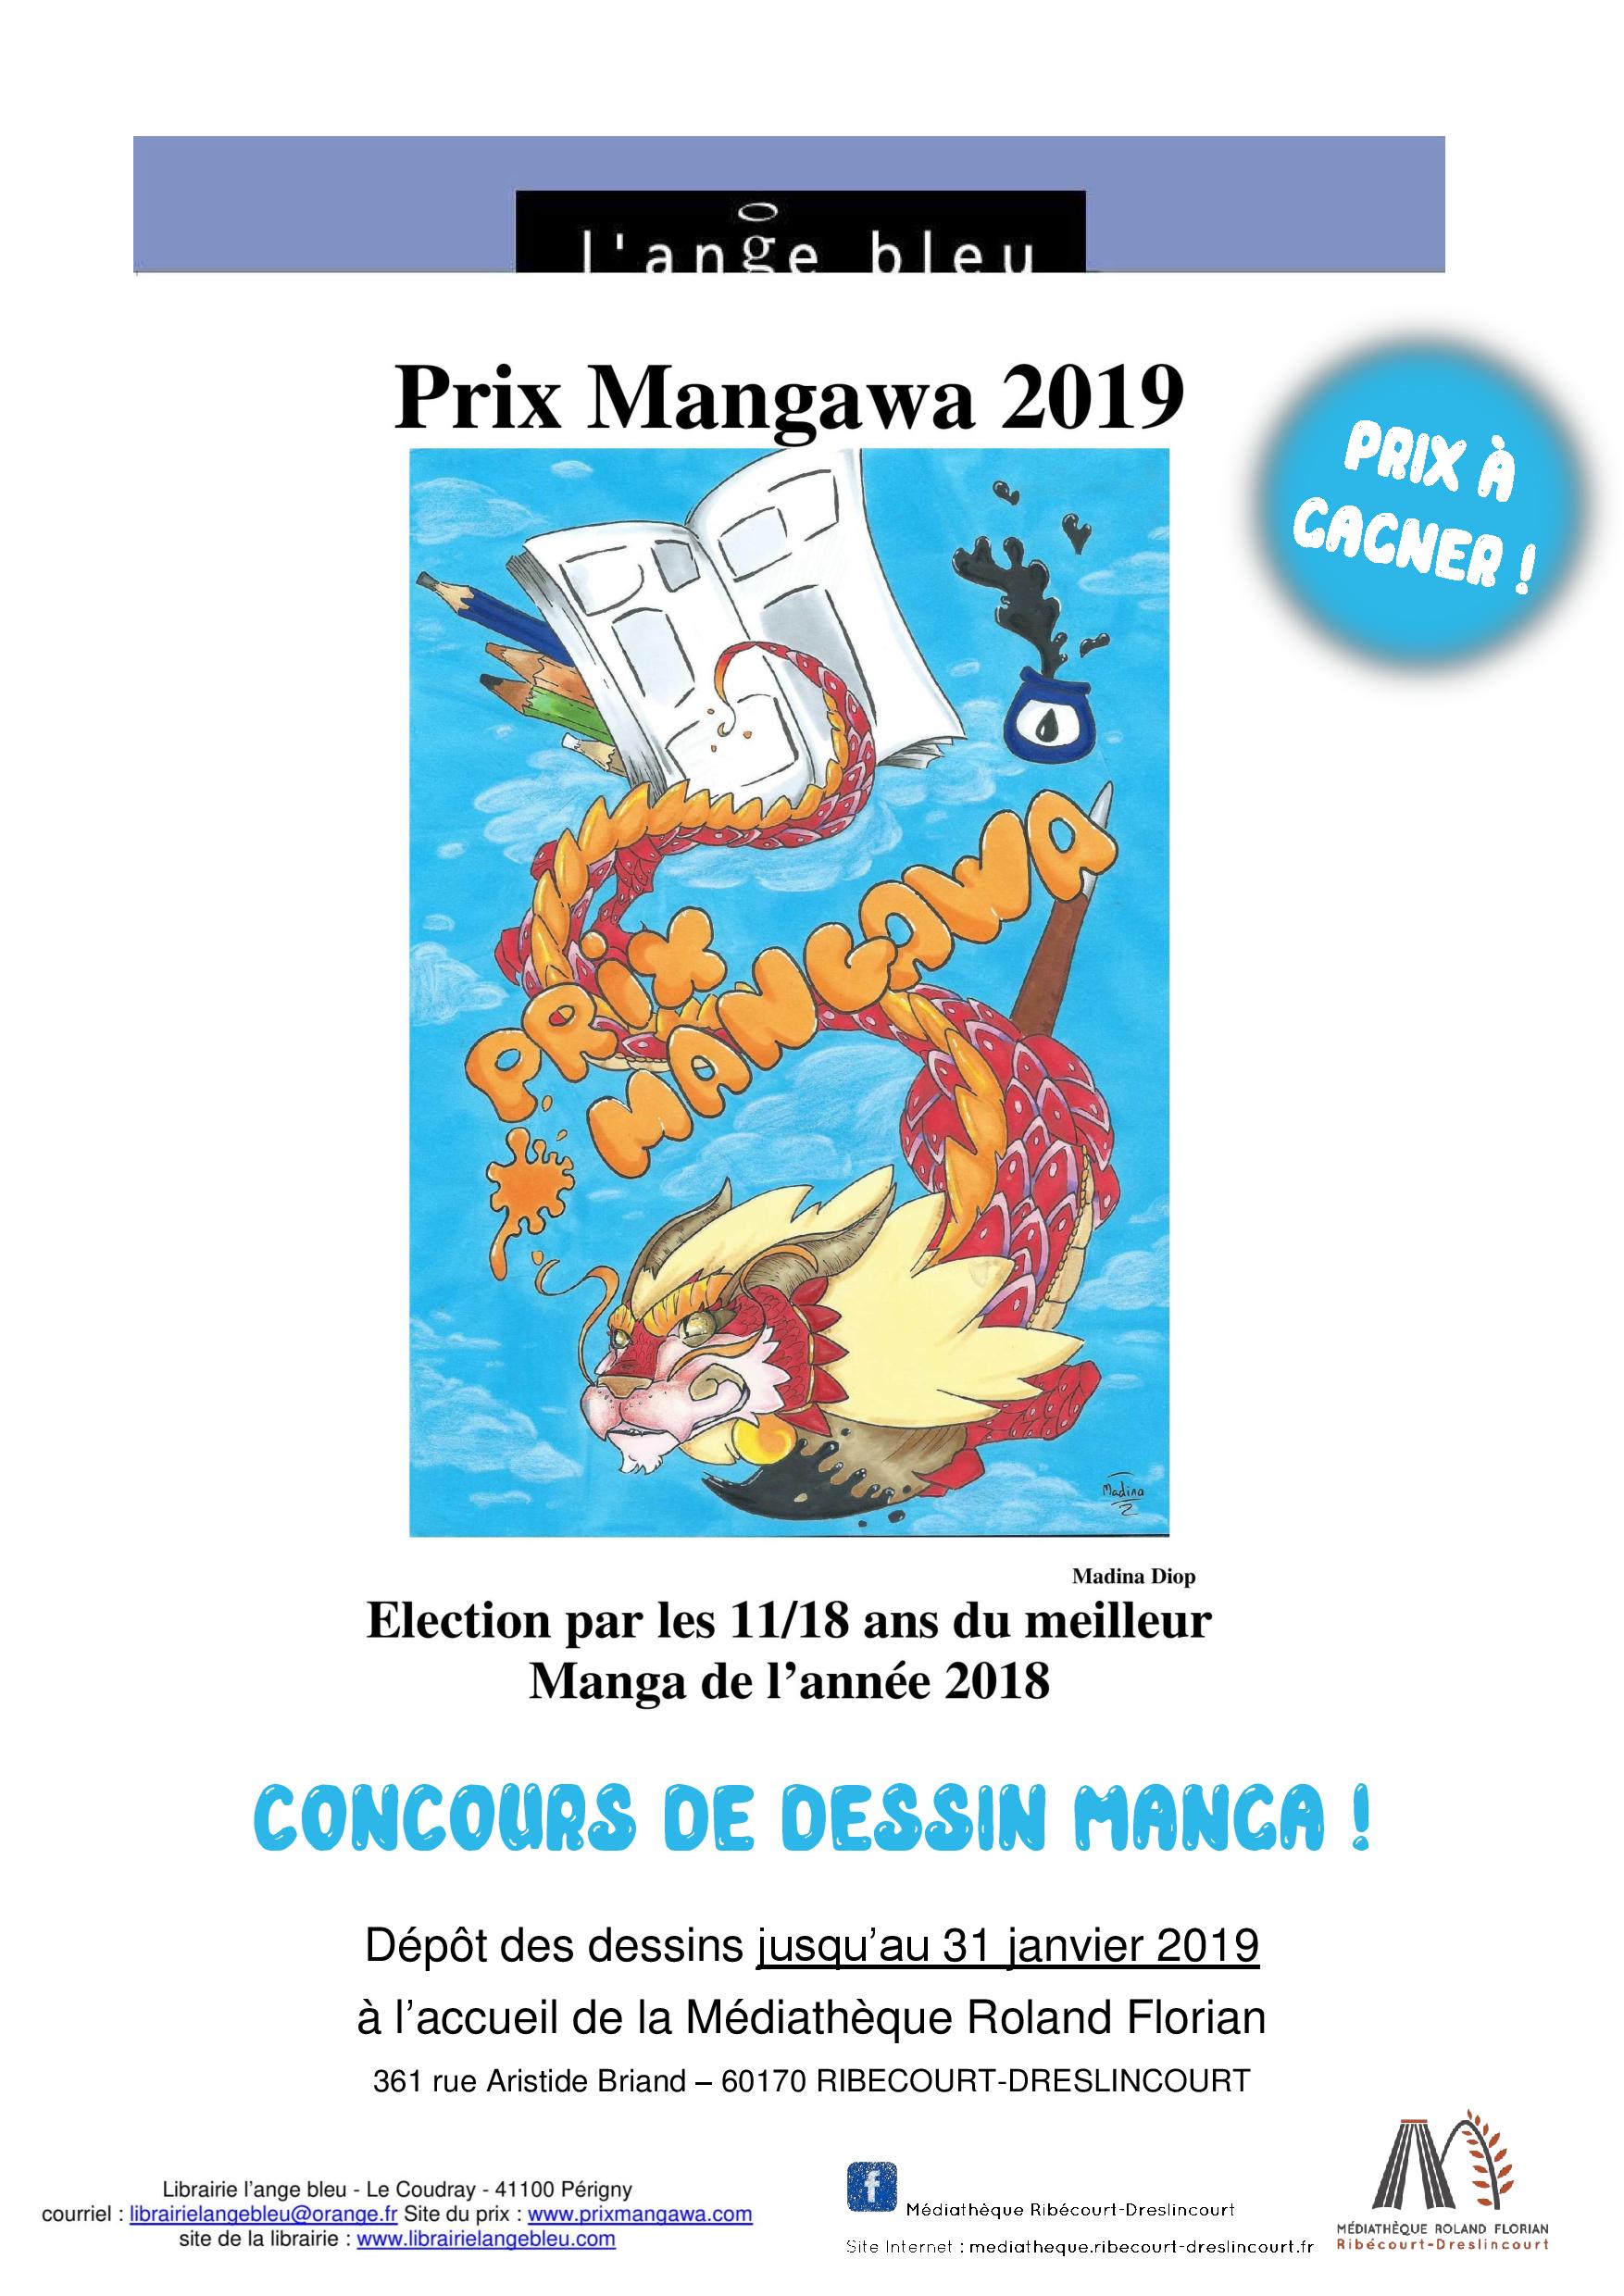 2019 Prix.mangawa Affiche Concours